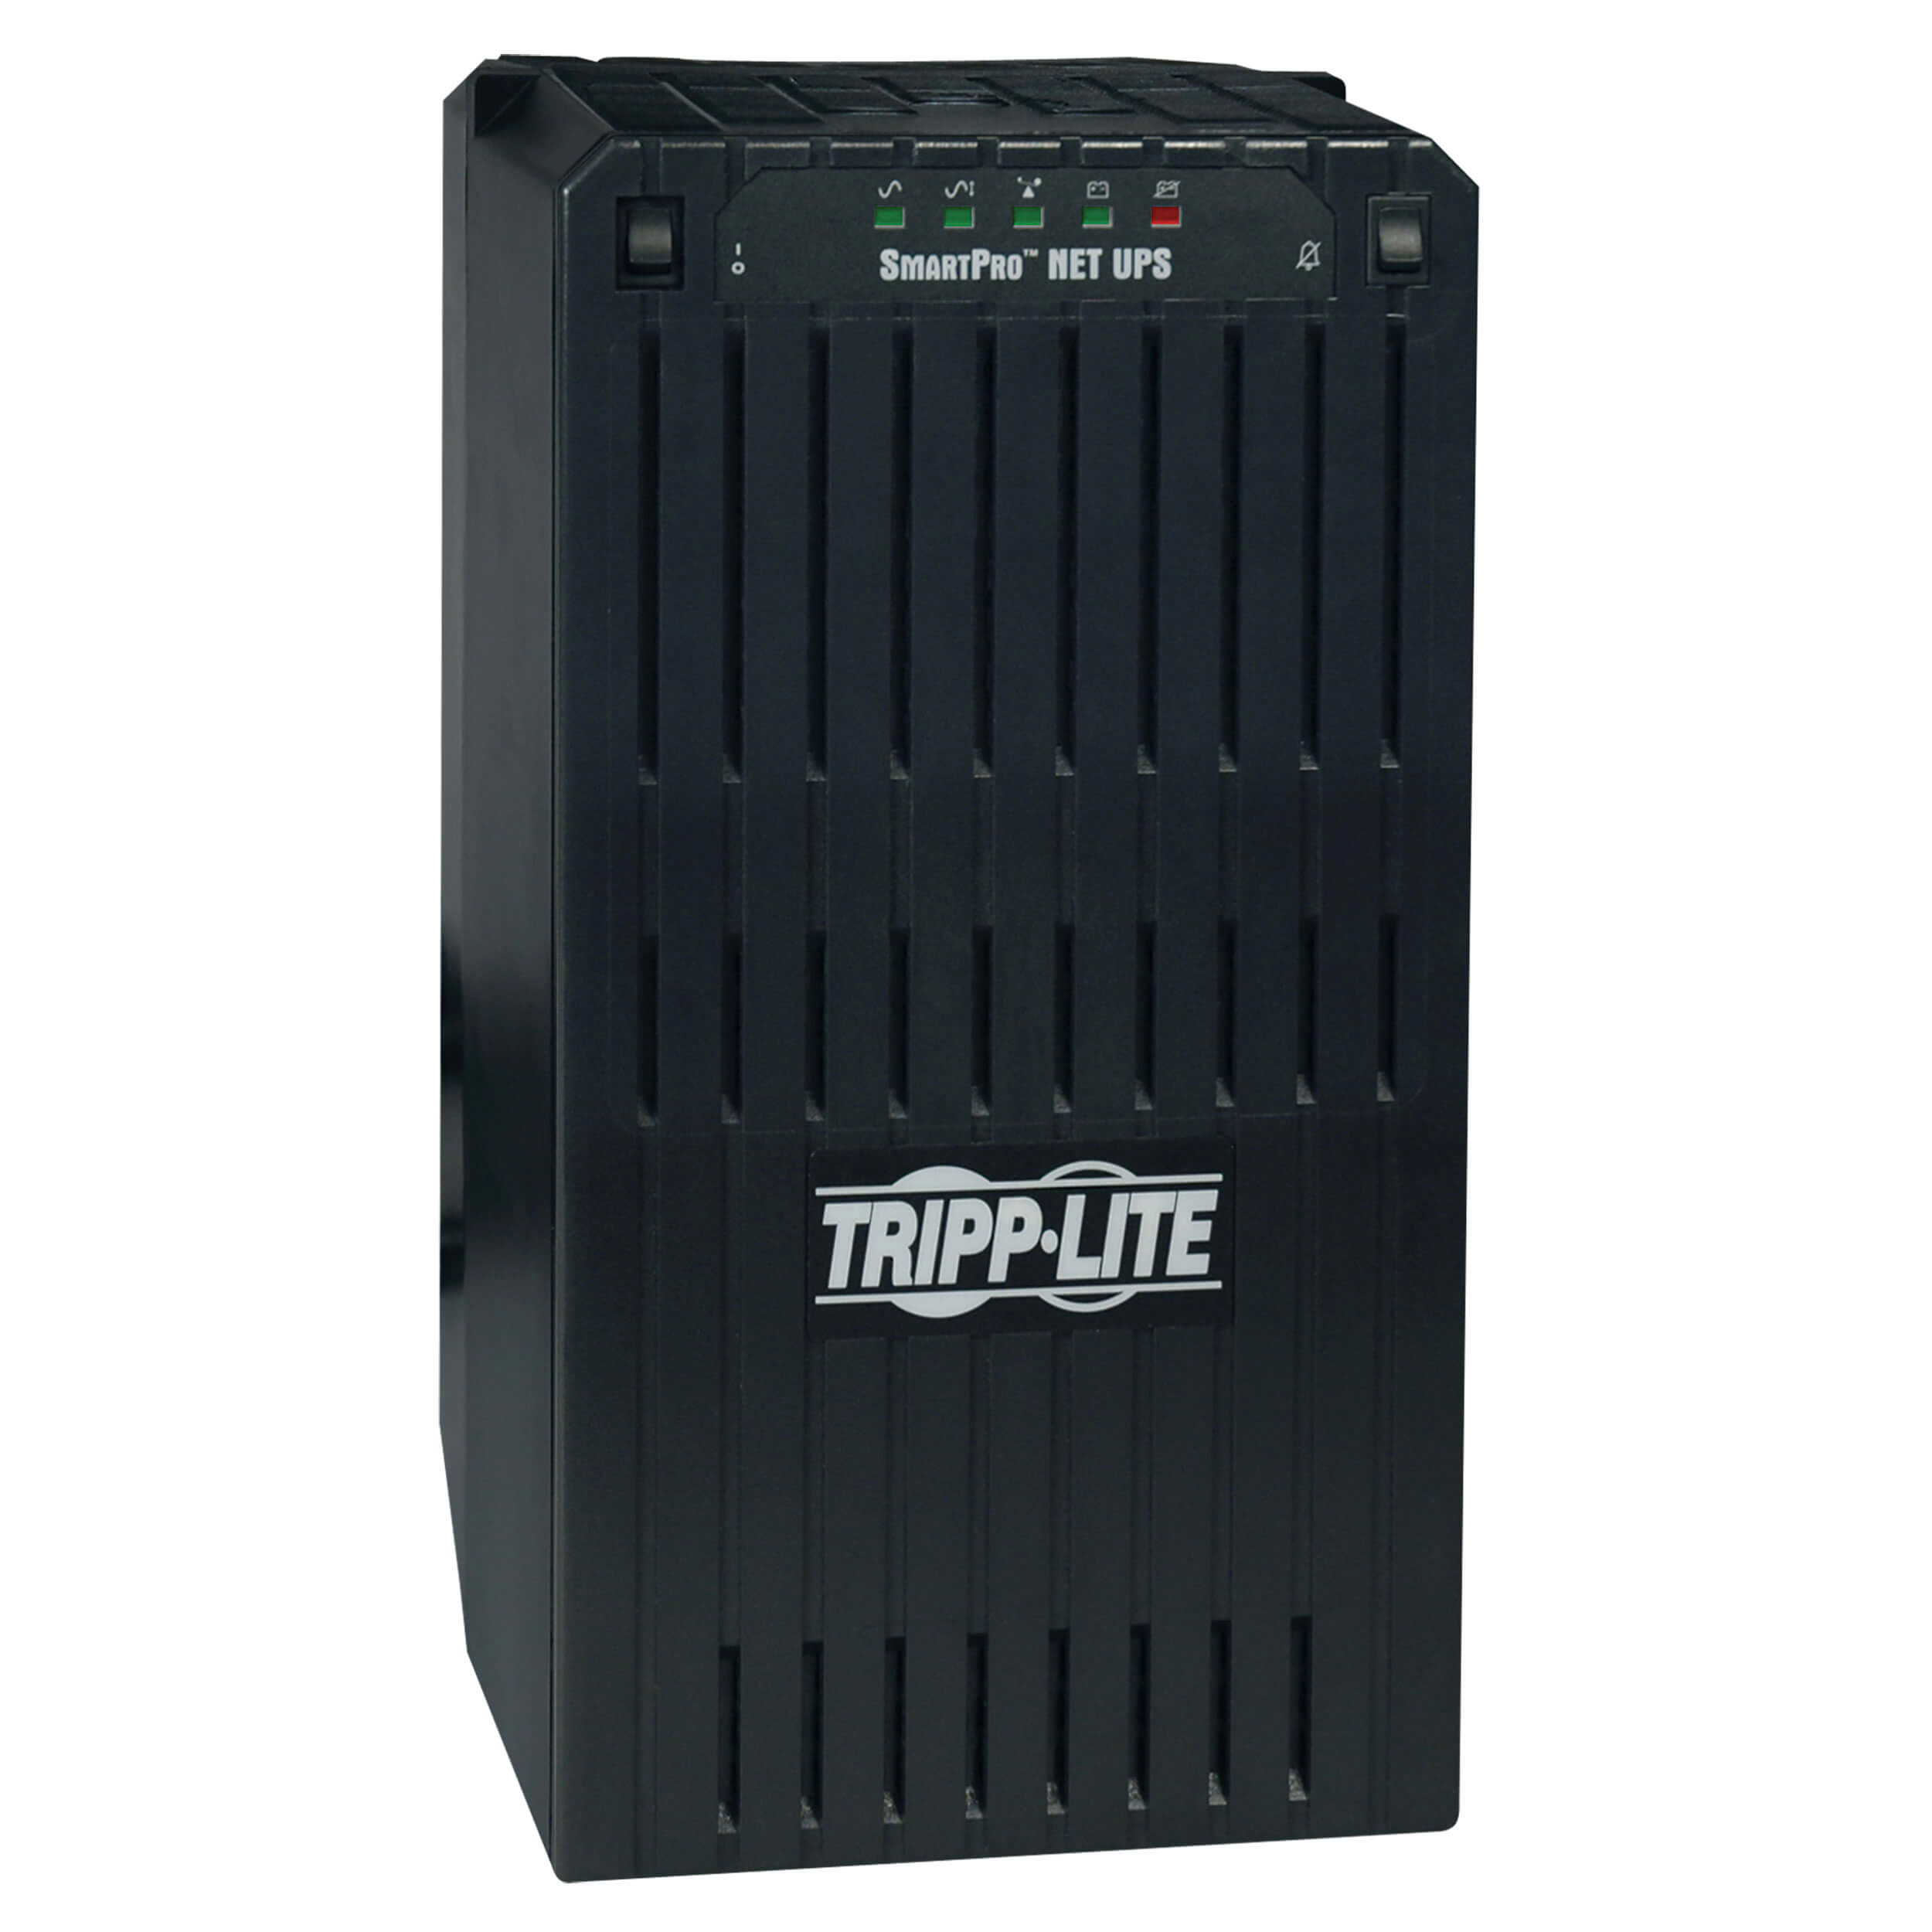 Tripp Lite SMART3000NET UPS No Break Interactivo SmartPro de 120V 3kVA 2.4kW, Torre, Operación Prolongada, 3 Puertos DB9